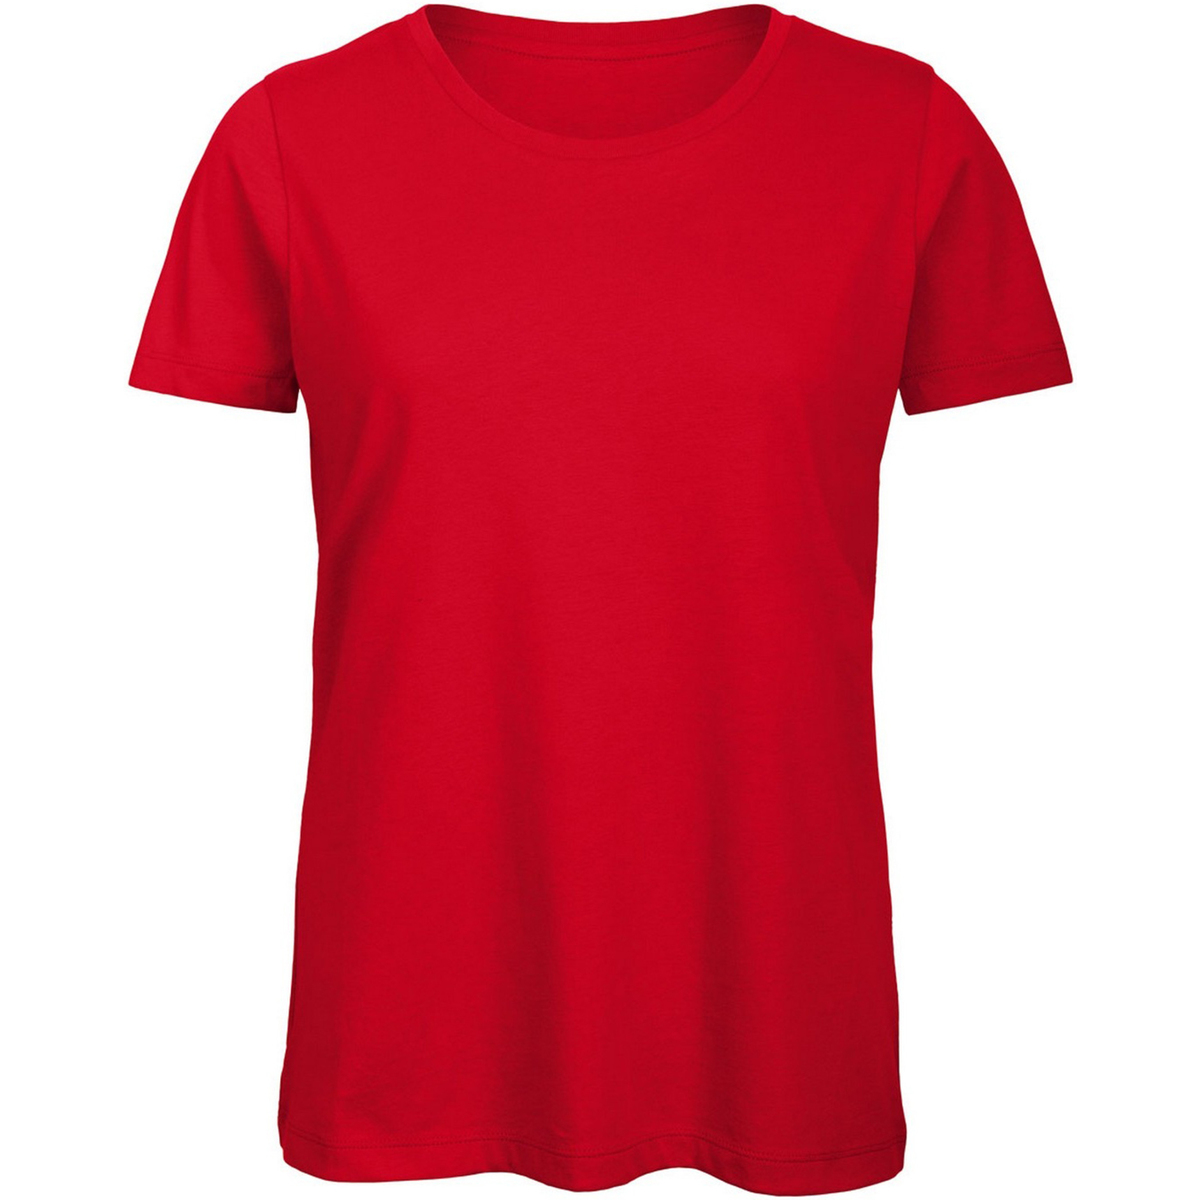 Vêtements Femme T-shirts manches longues Bird Embriodered Viscose Shirt TW043 Rouge